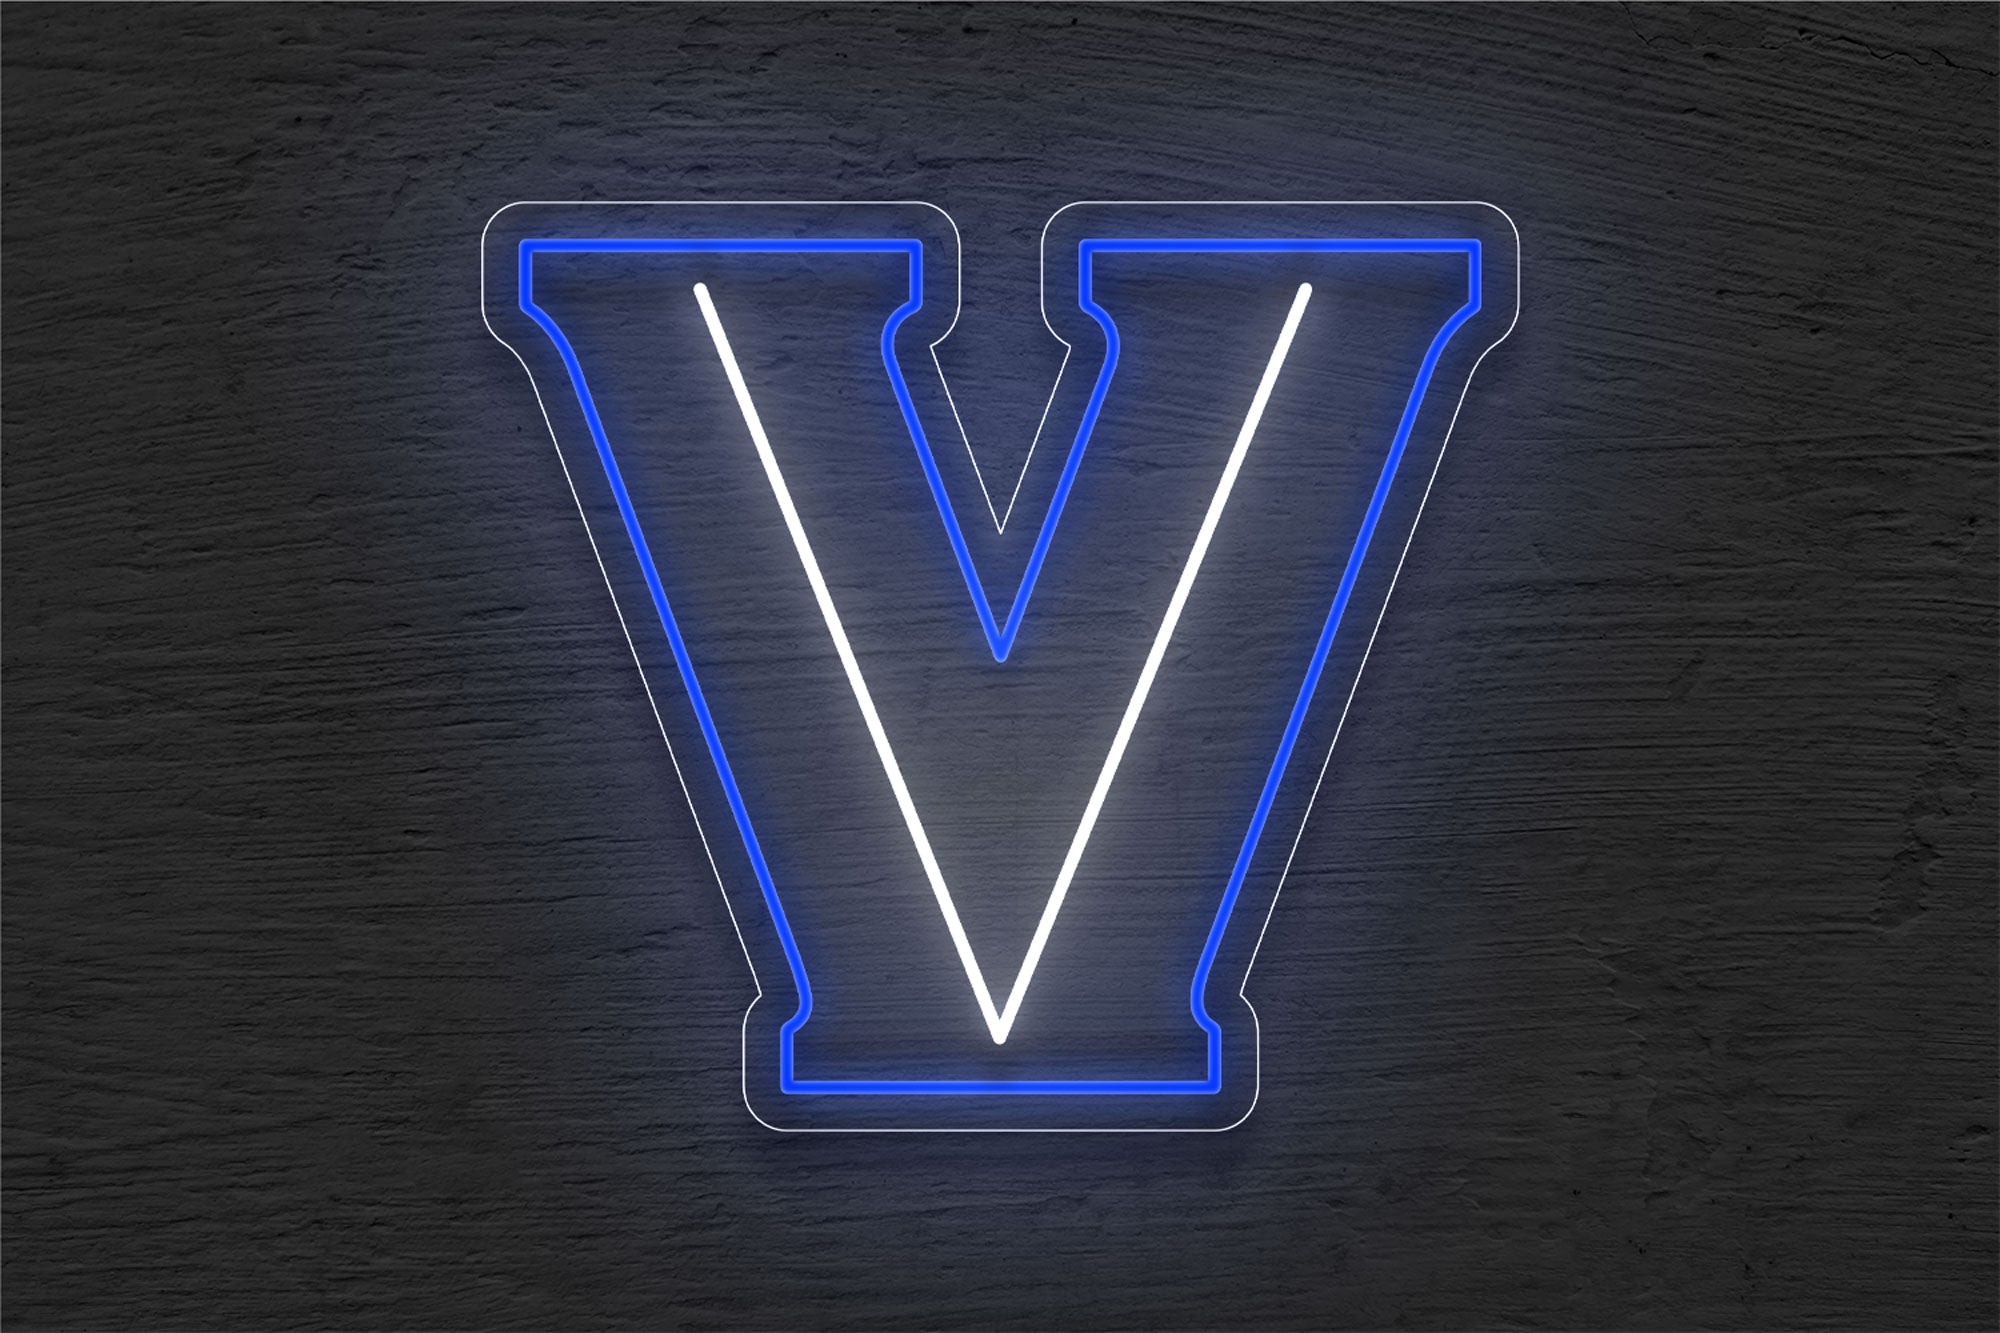 Villanova Wildcats Men's Basketball LED Neon Sign